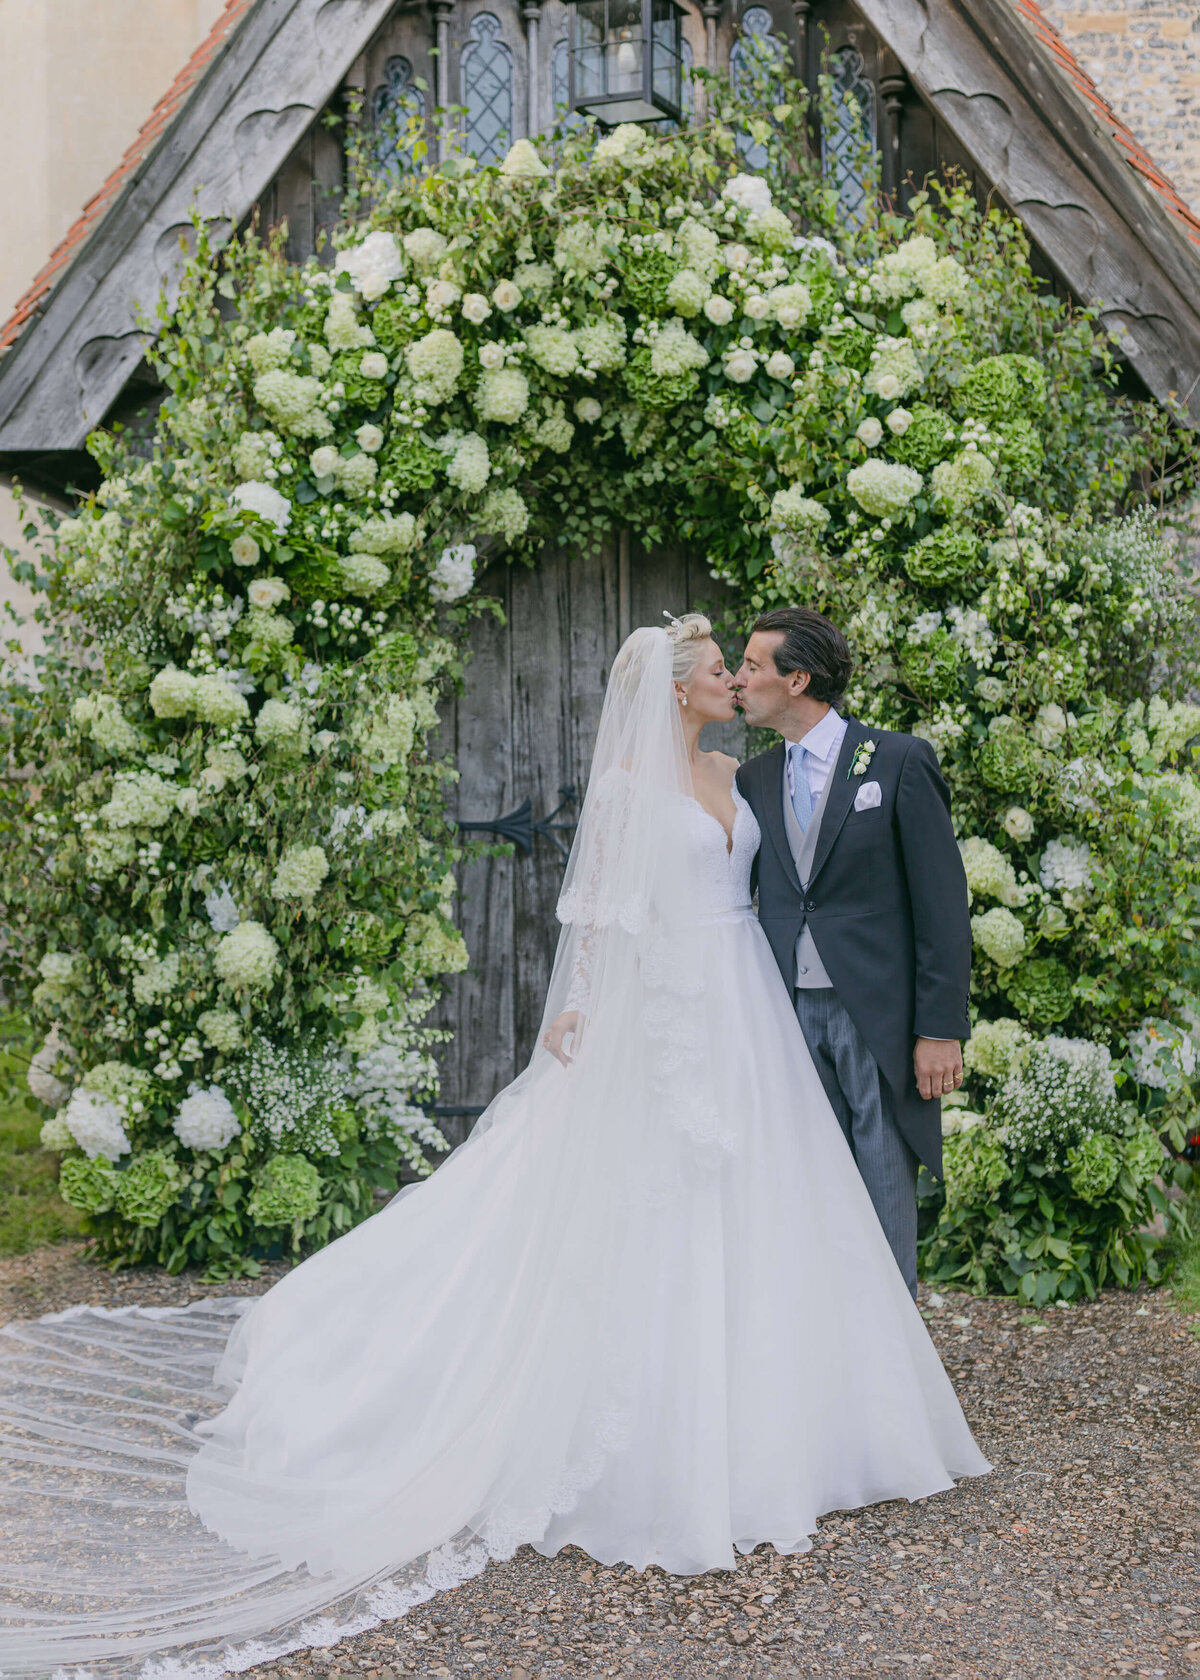 chloe-winstanley-weddings-hambleden-church-flower-arch-suzanne-neville-kiss